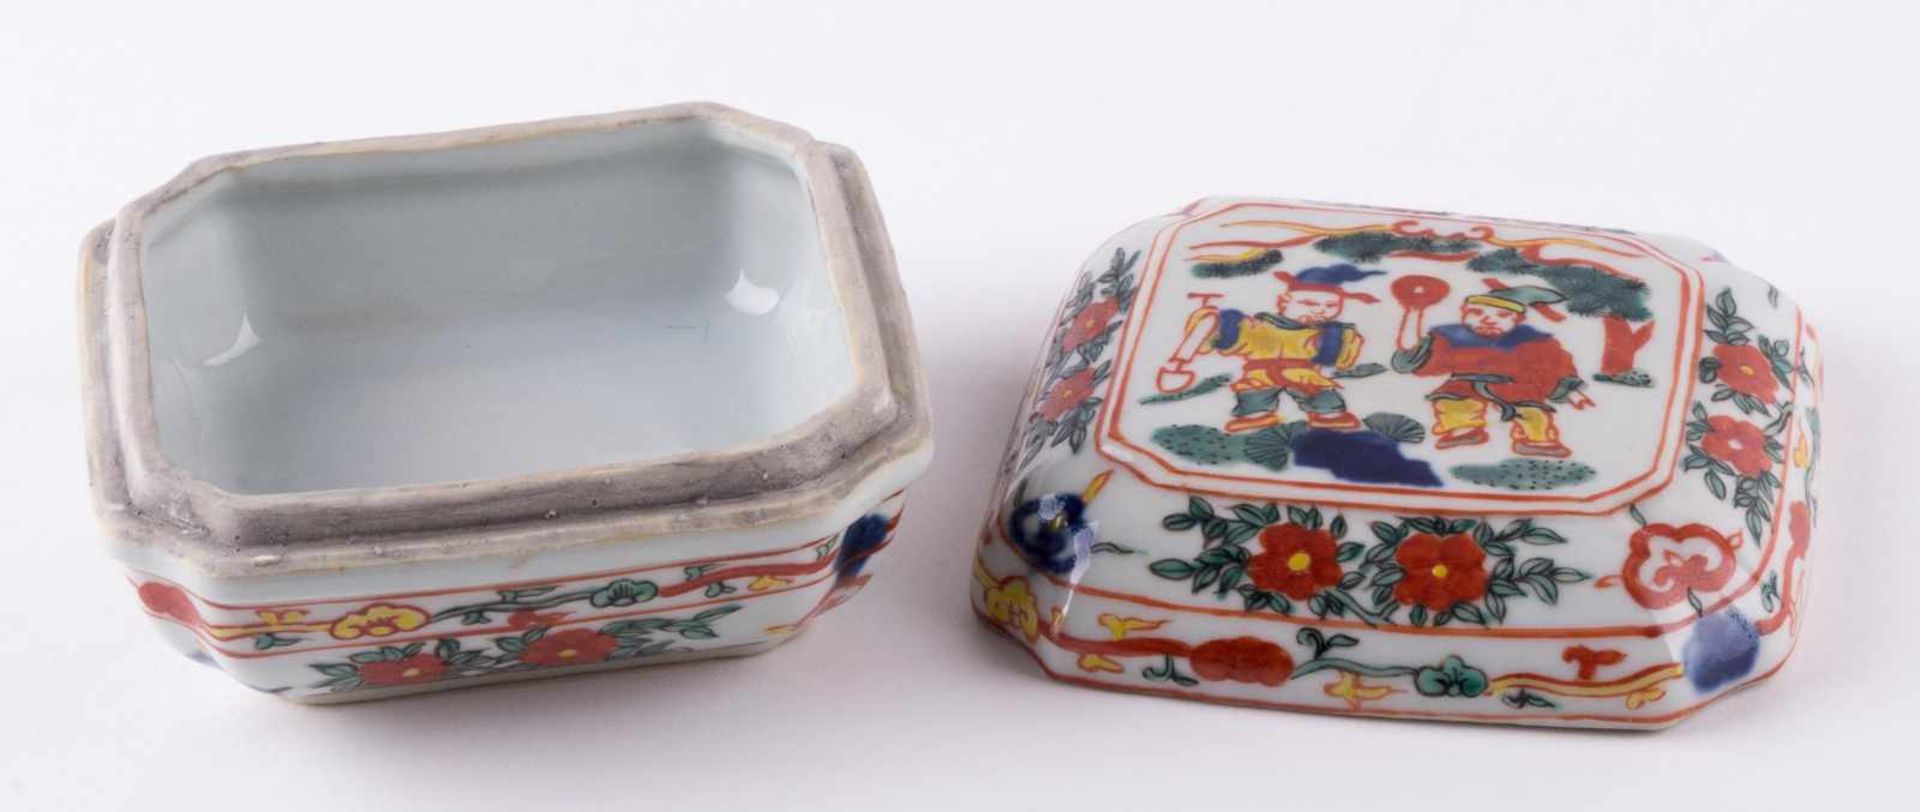 Deckeldose China / Lidded bowl, China alte Dose wohl aus der Kangxi Periode, umlaufend mit - Bild 4 aus 5